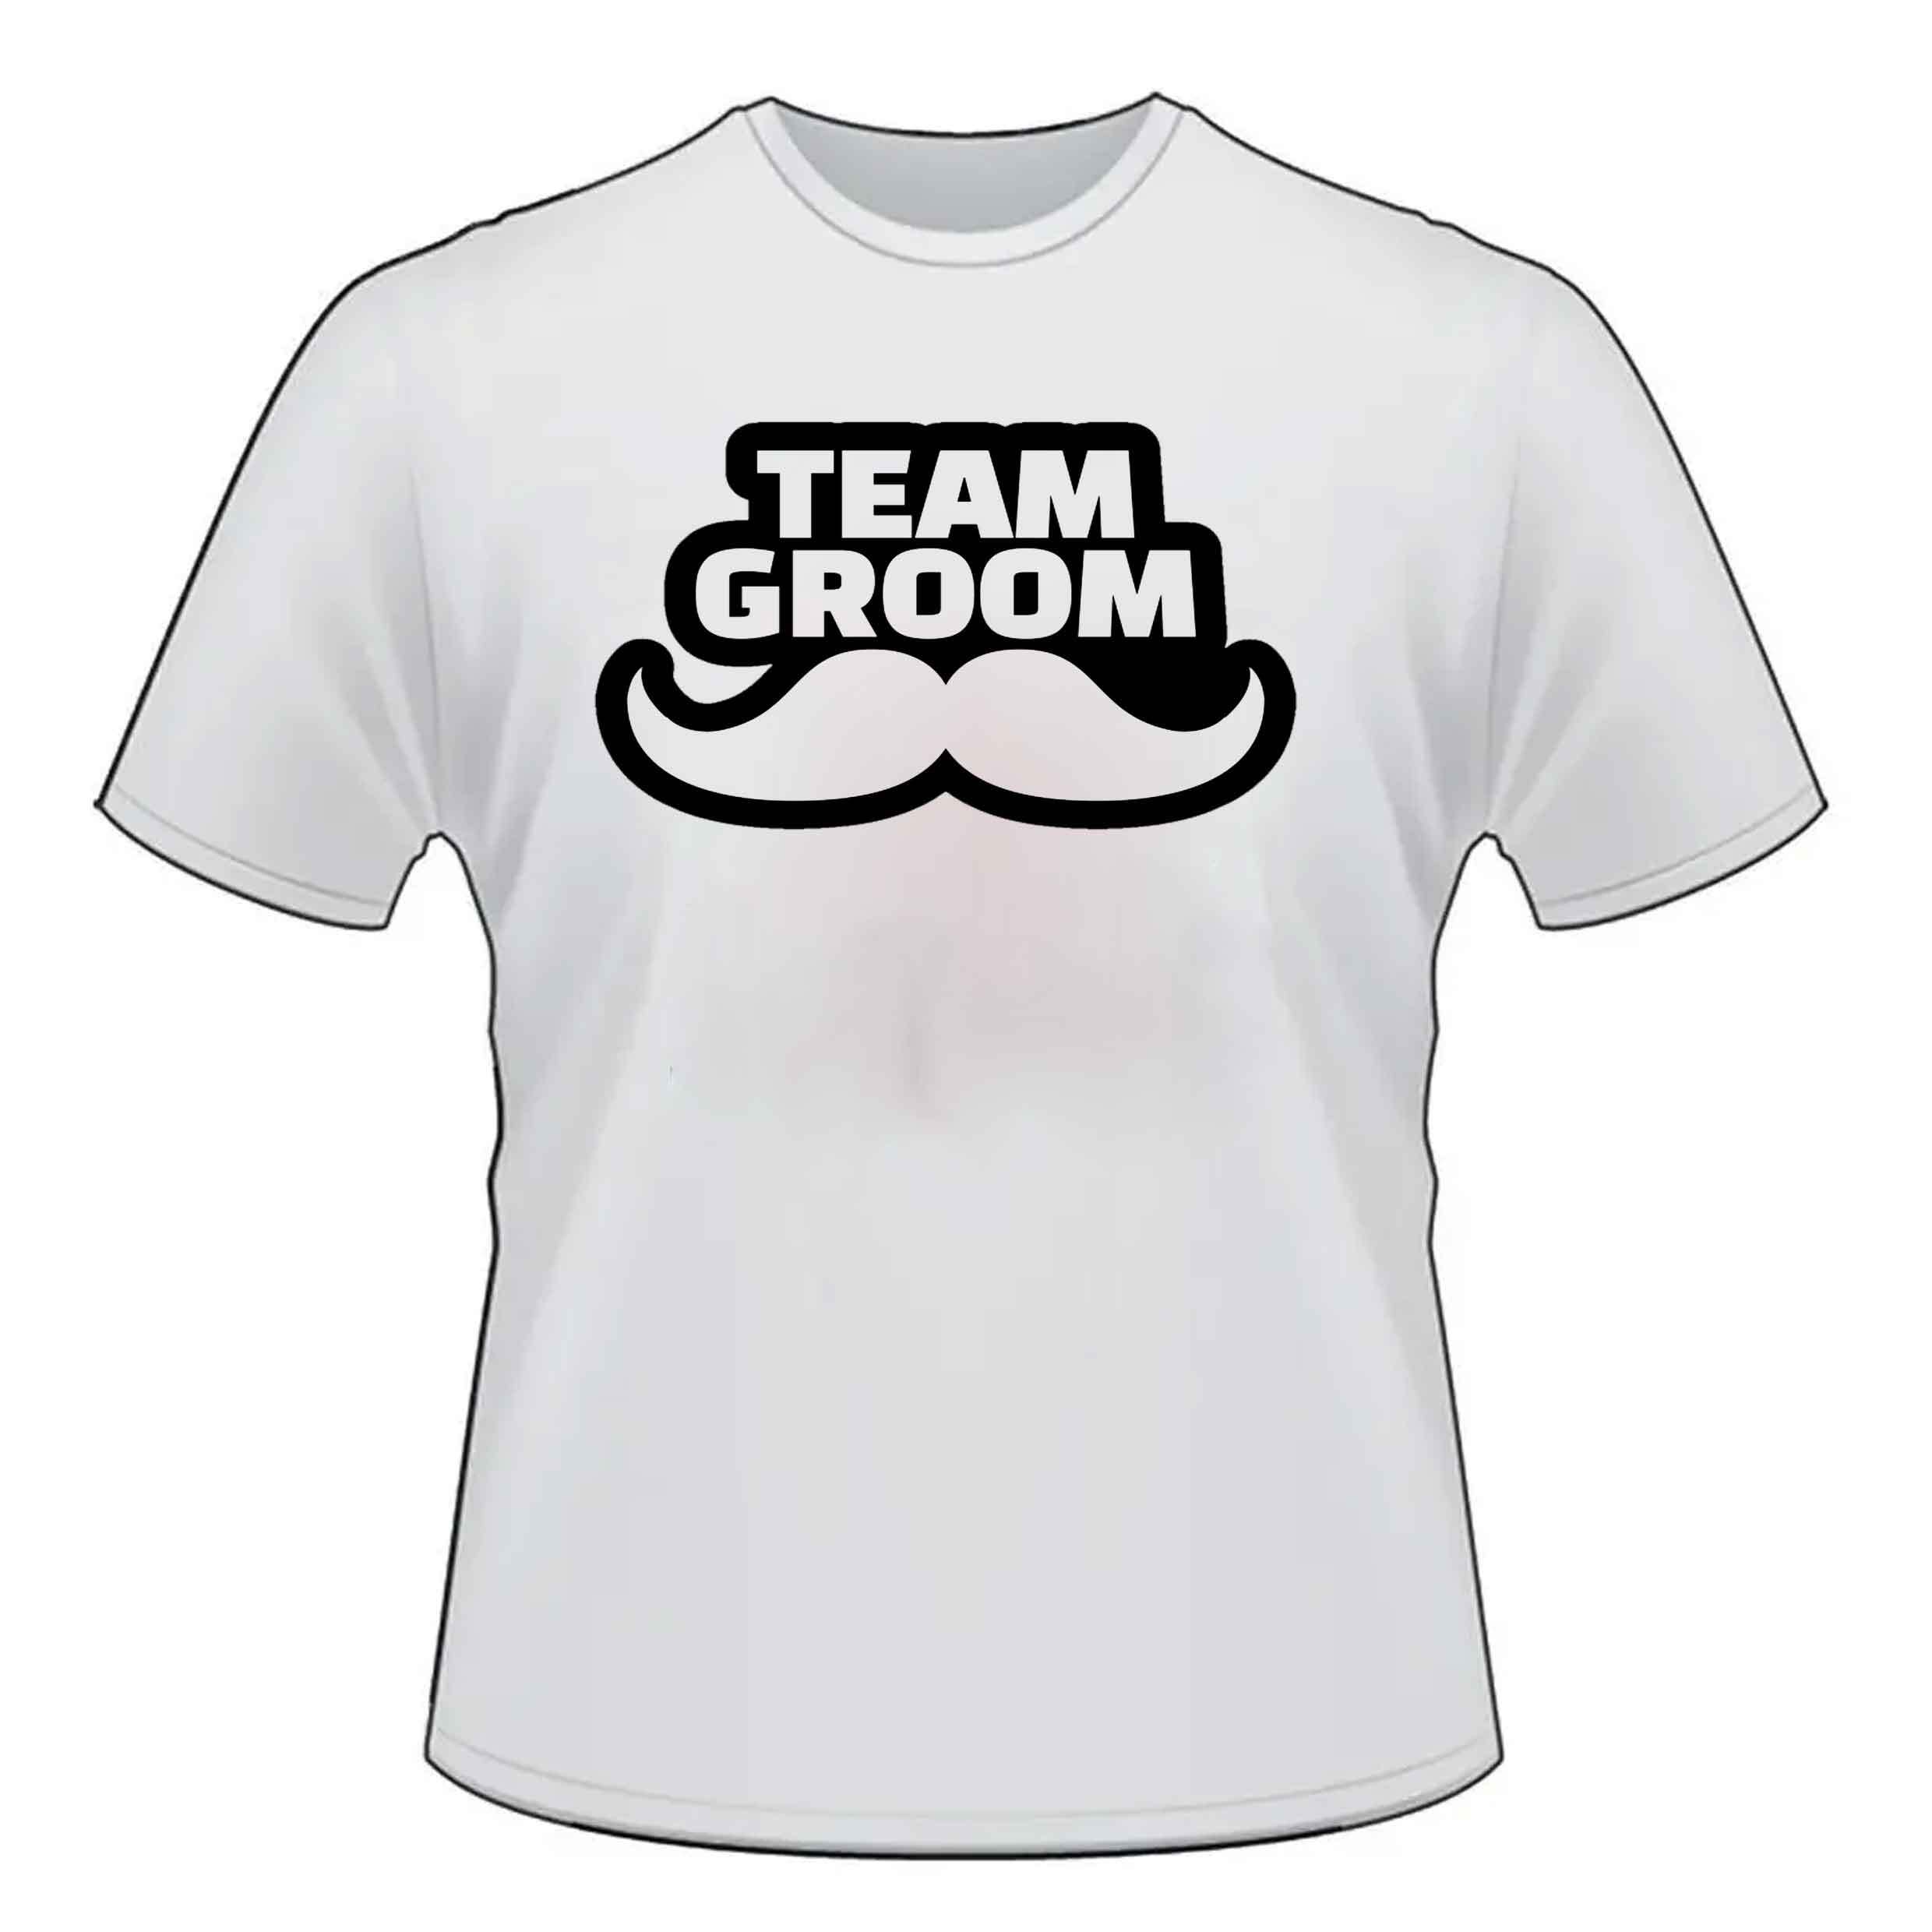 team-groon-שפם